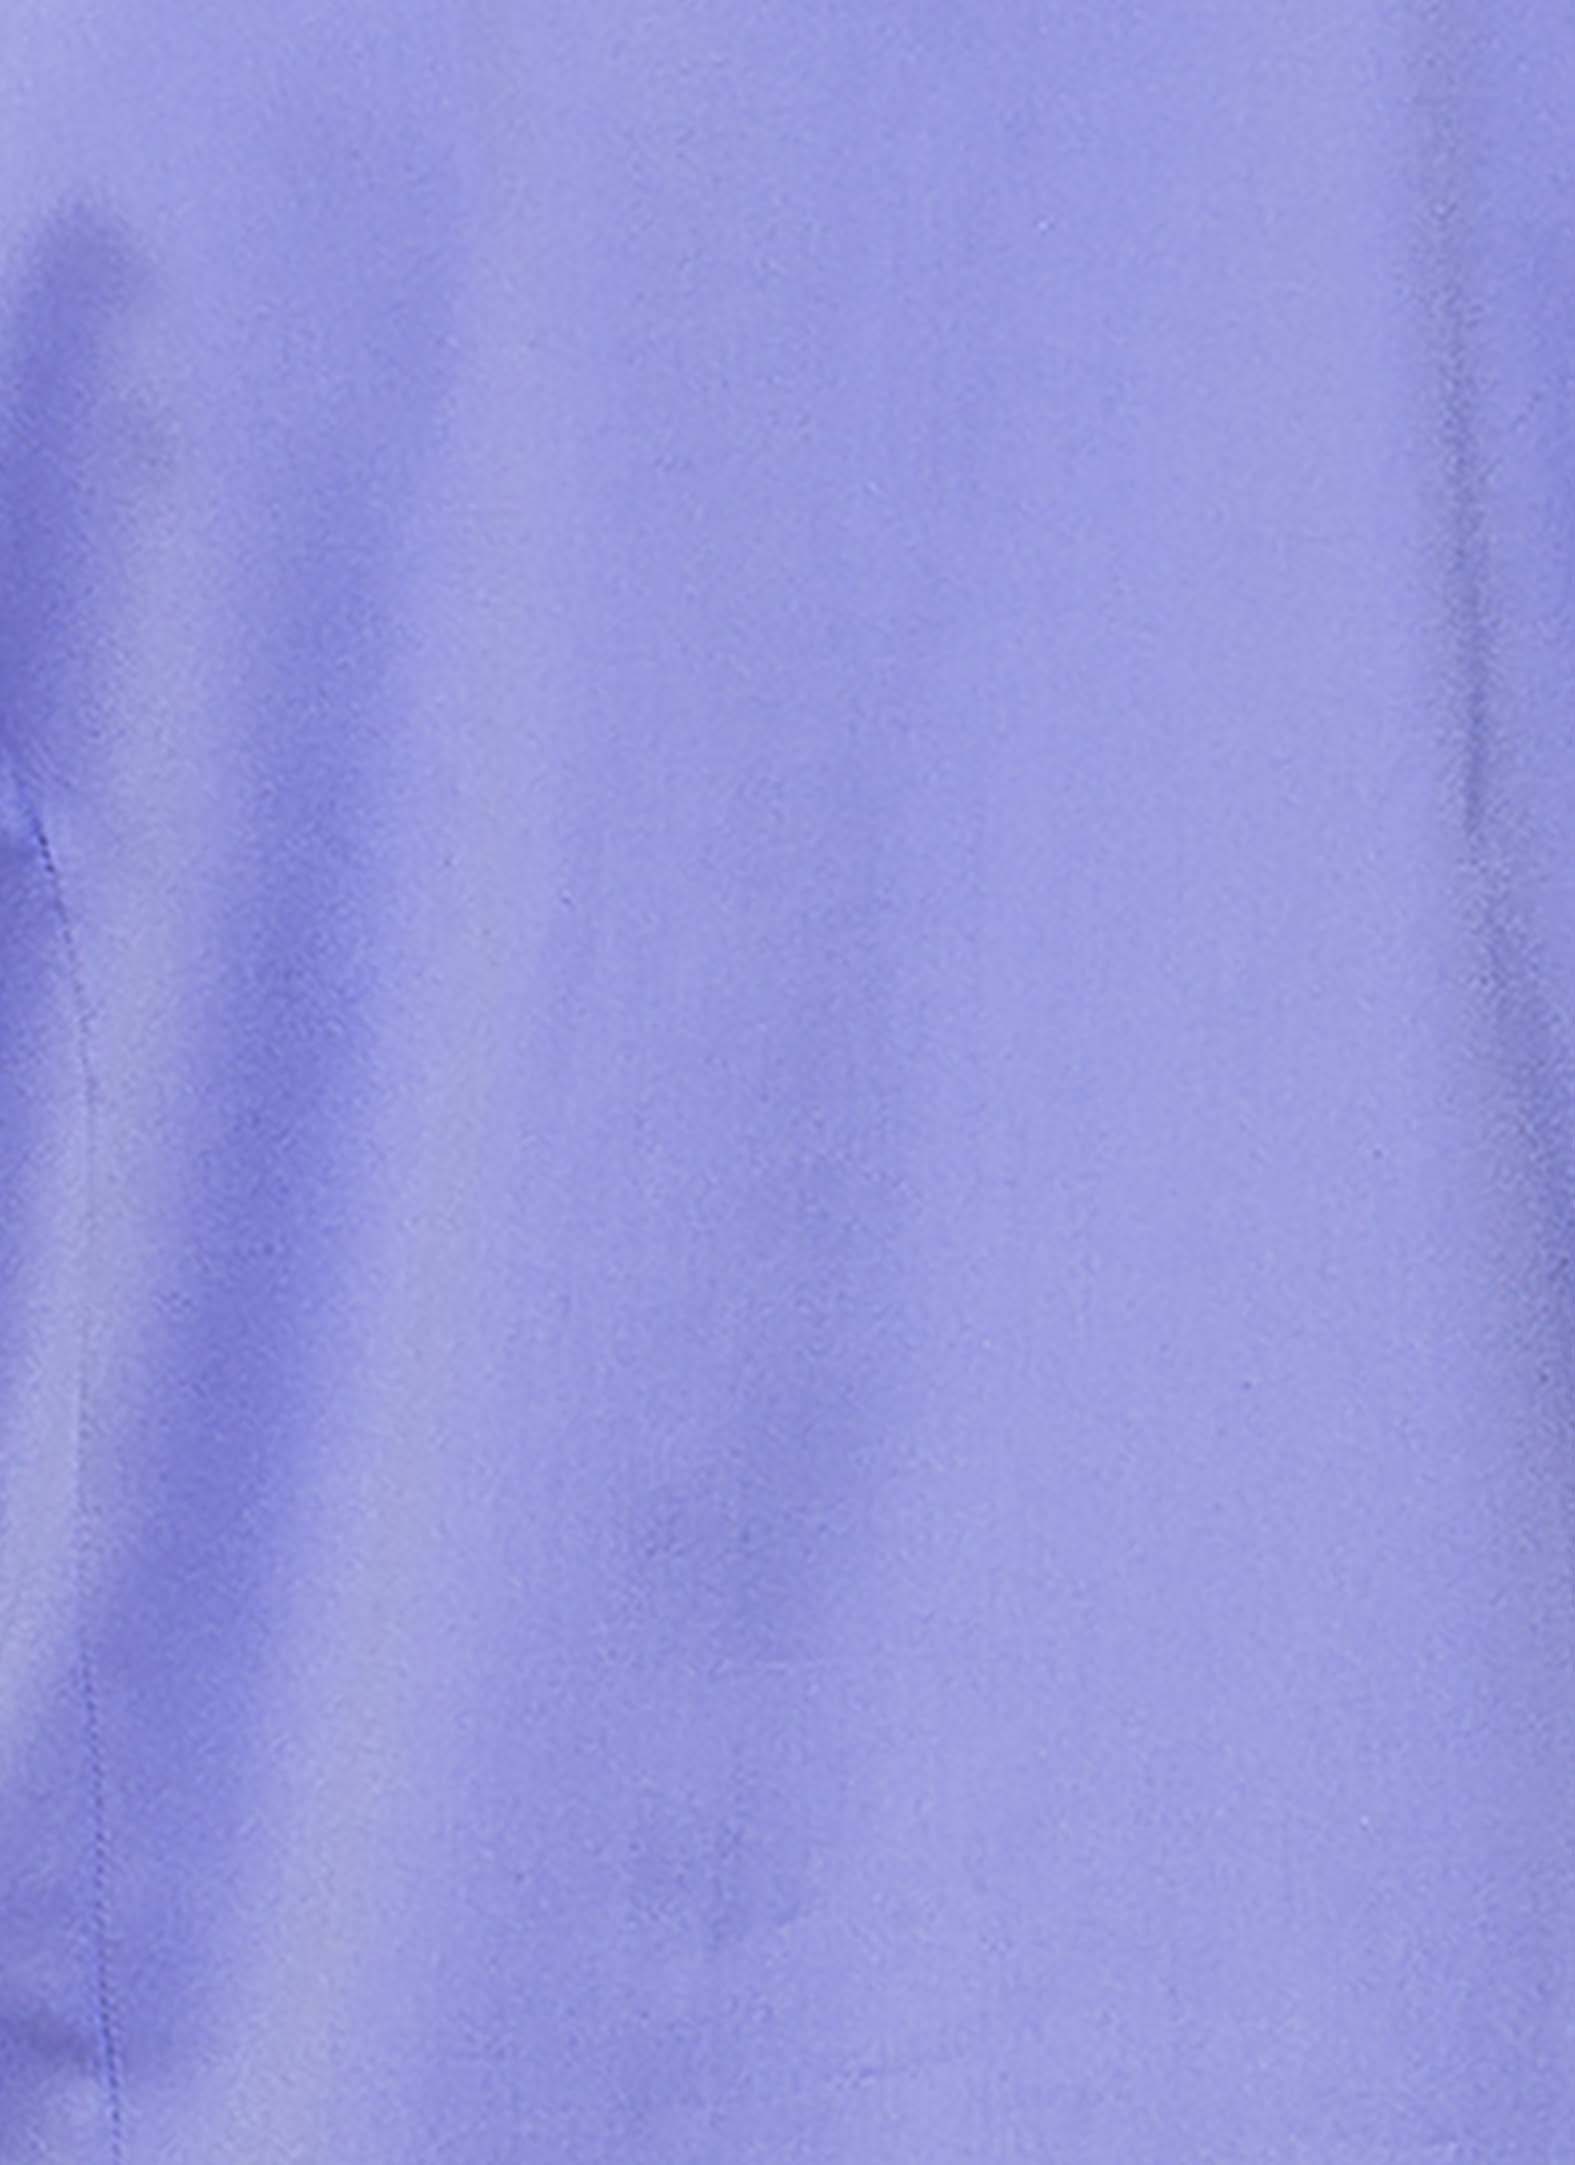 Shirt Long Sleeve 95003 Blue